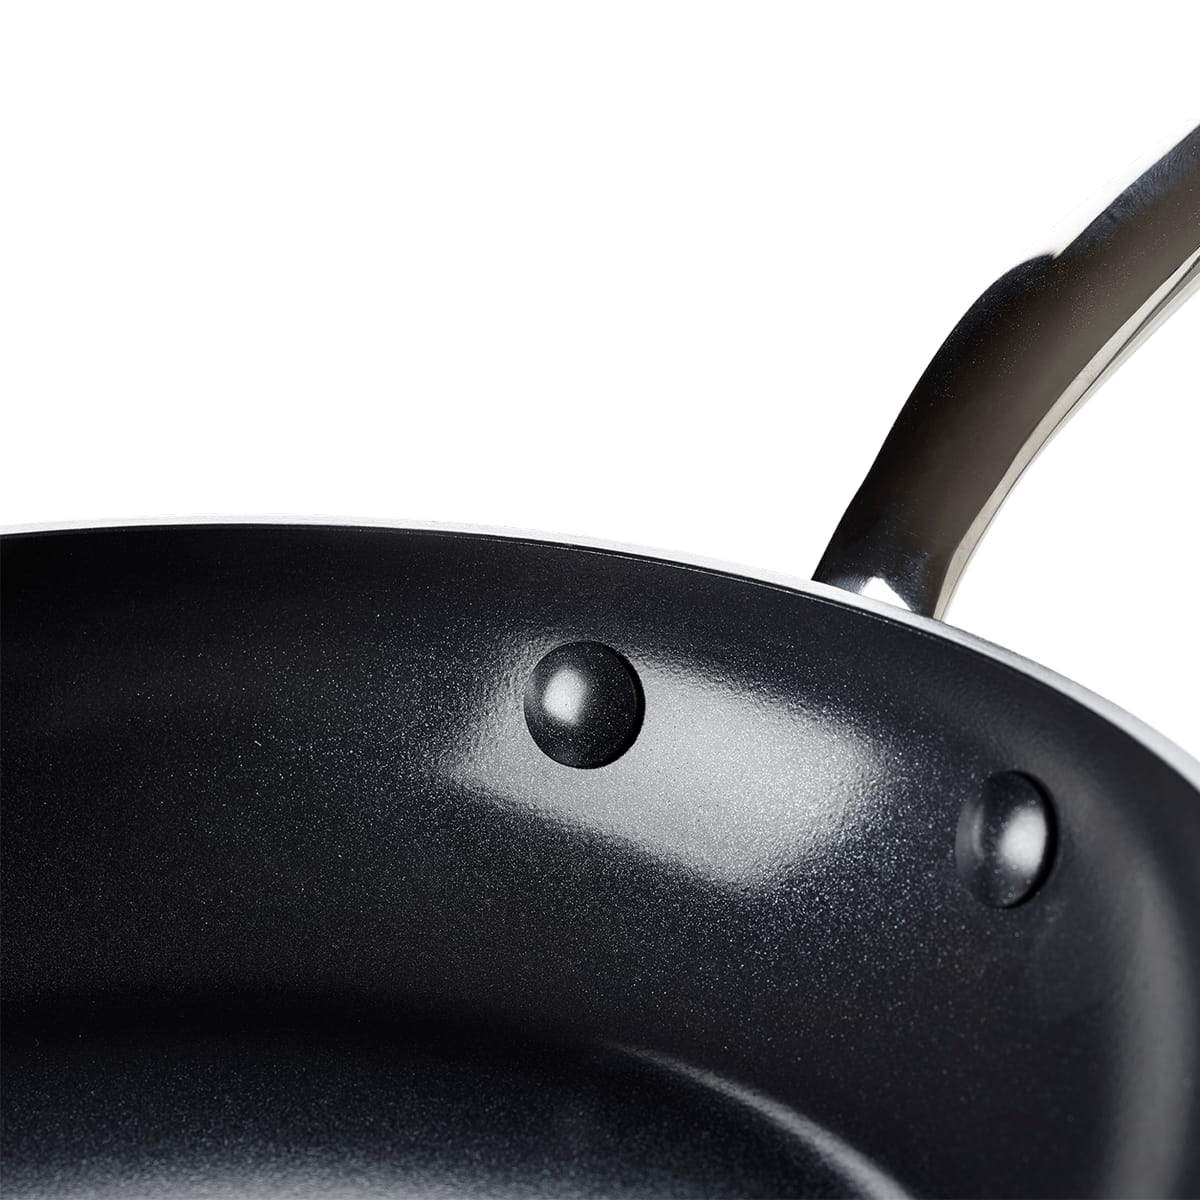 CW002207-002 - Barcelona Frying Pan, Black - 28cm - Product Image 3